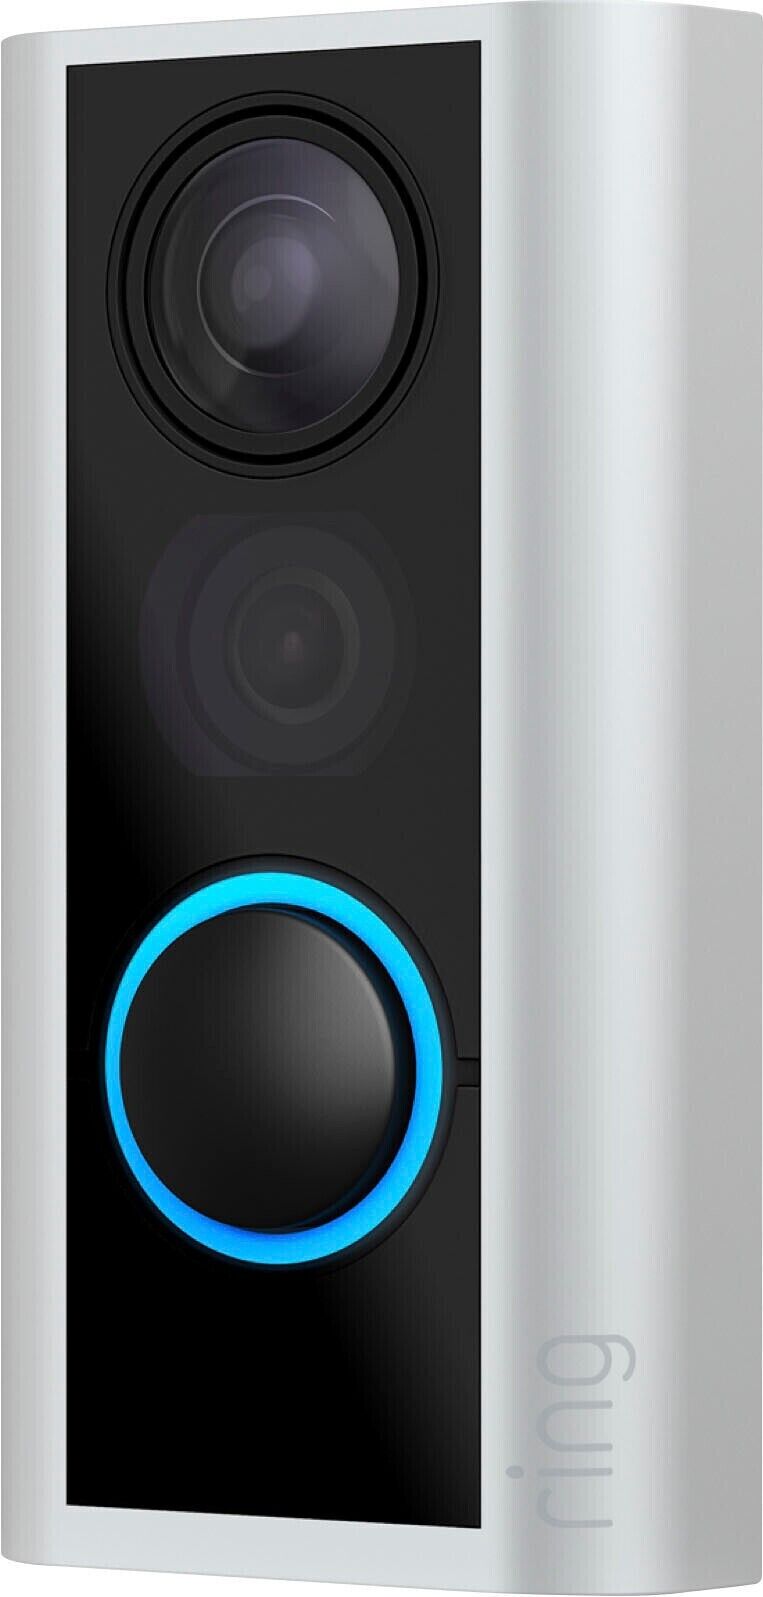 Brand New! Ring - Peephole Cam Video Doorbell - Battery Powered - Satin Nickel